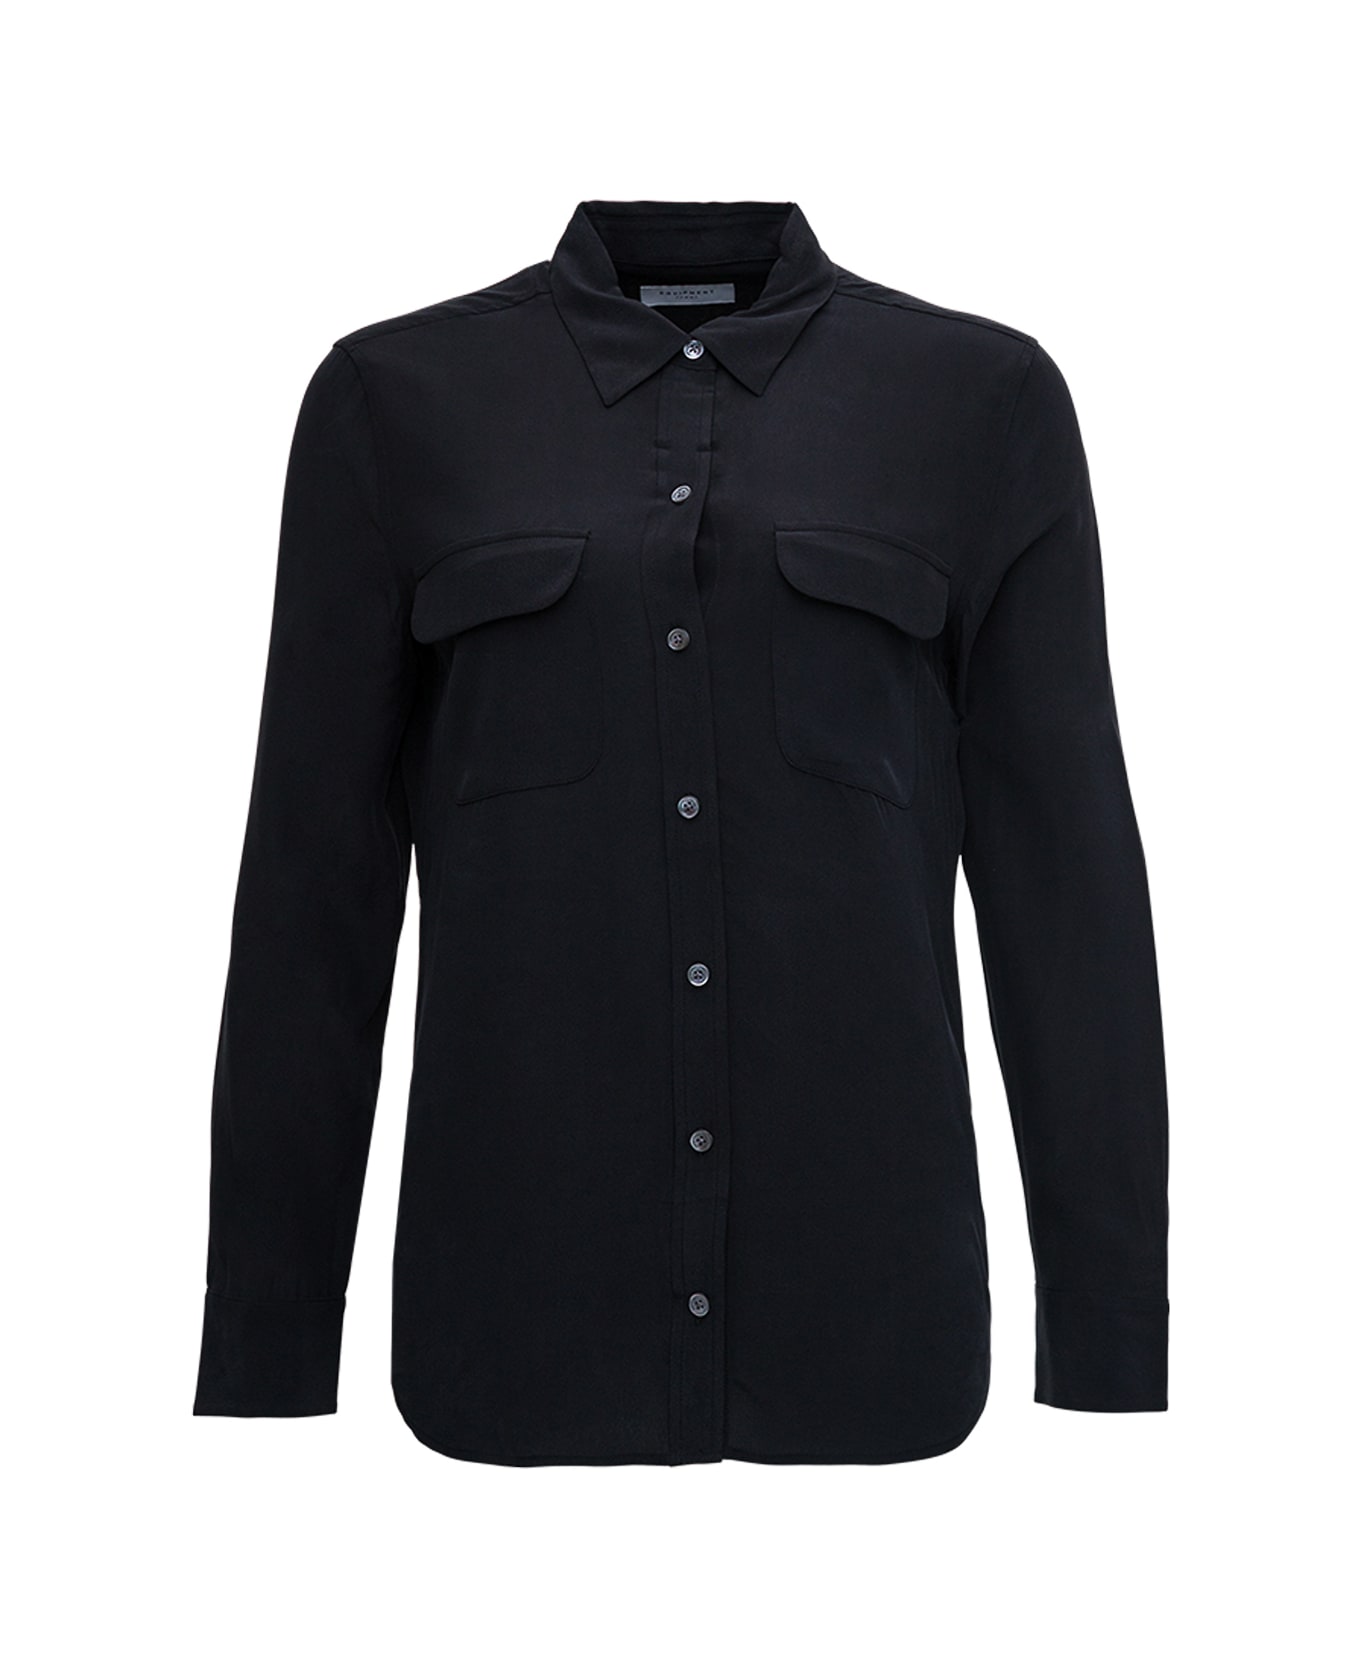 Equipment Black Silk Shirt With Pockets - Black